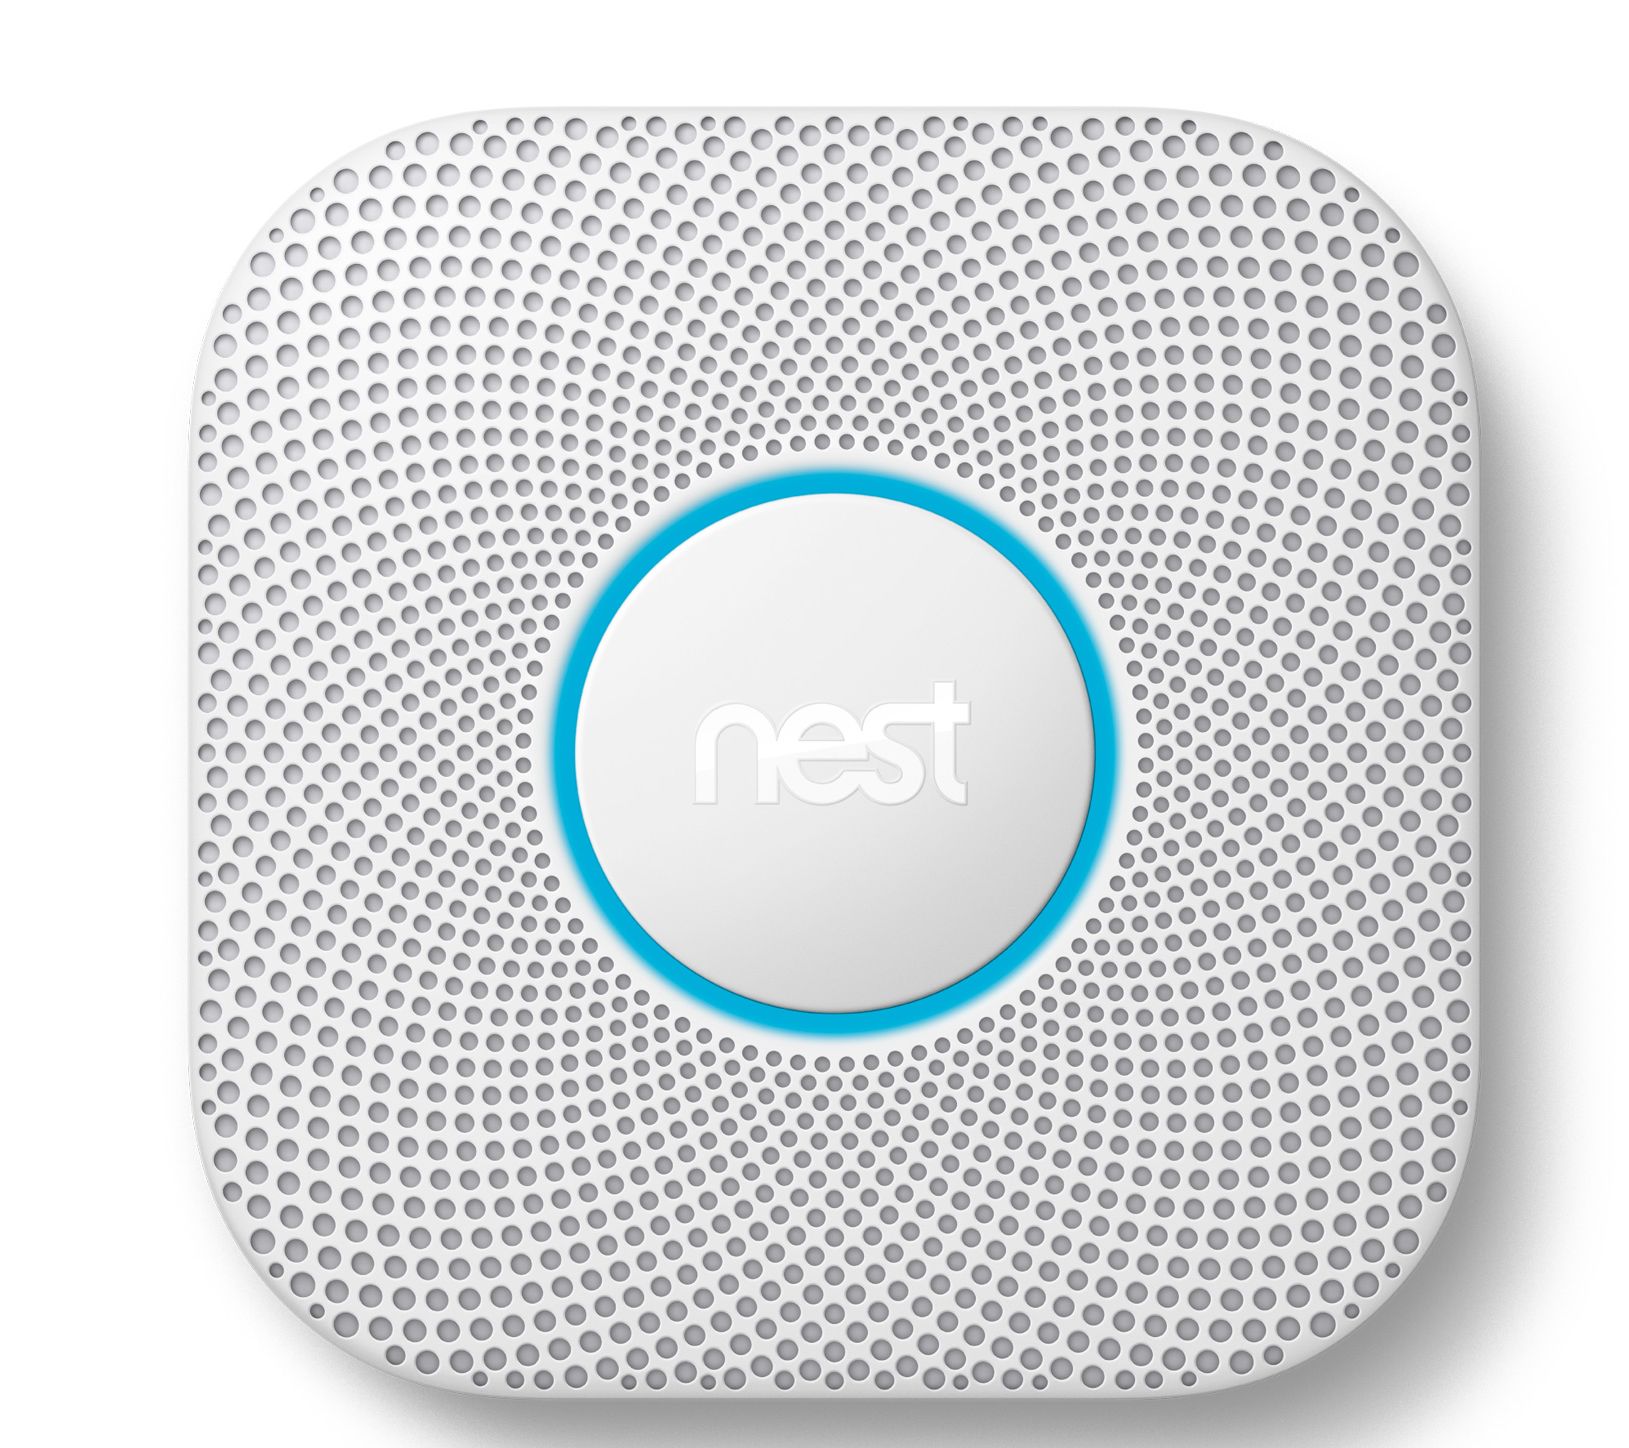 Google Nest Protect Smoke Alarm and Carbon Monoxide Detector, 2-pack